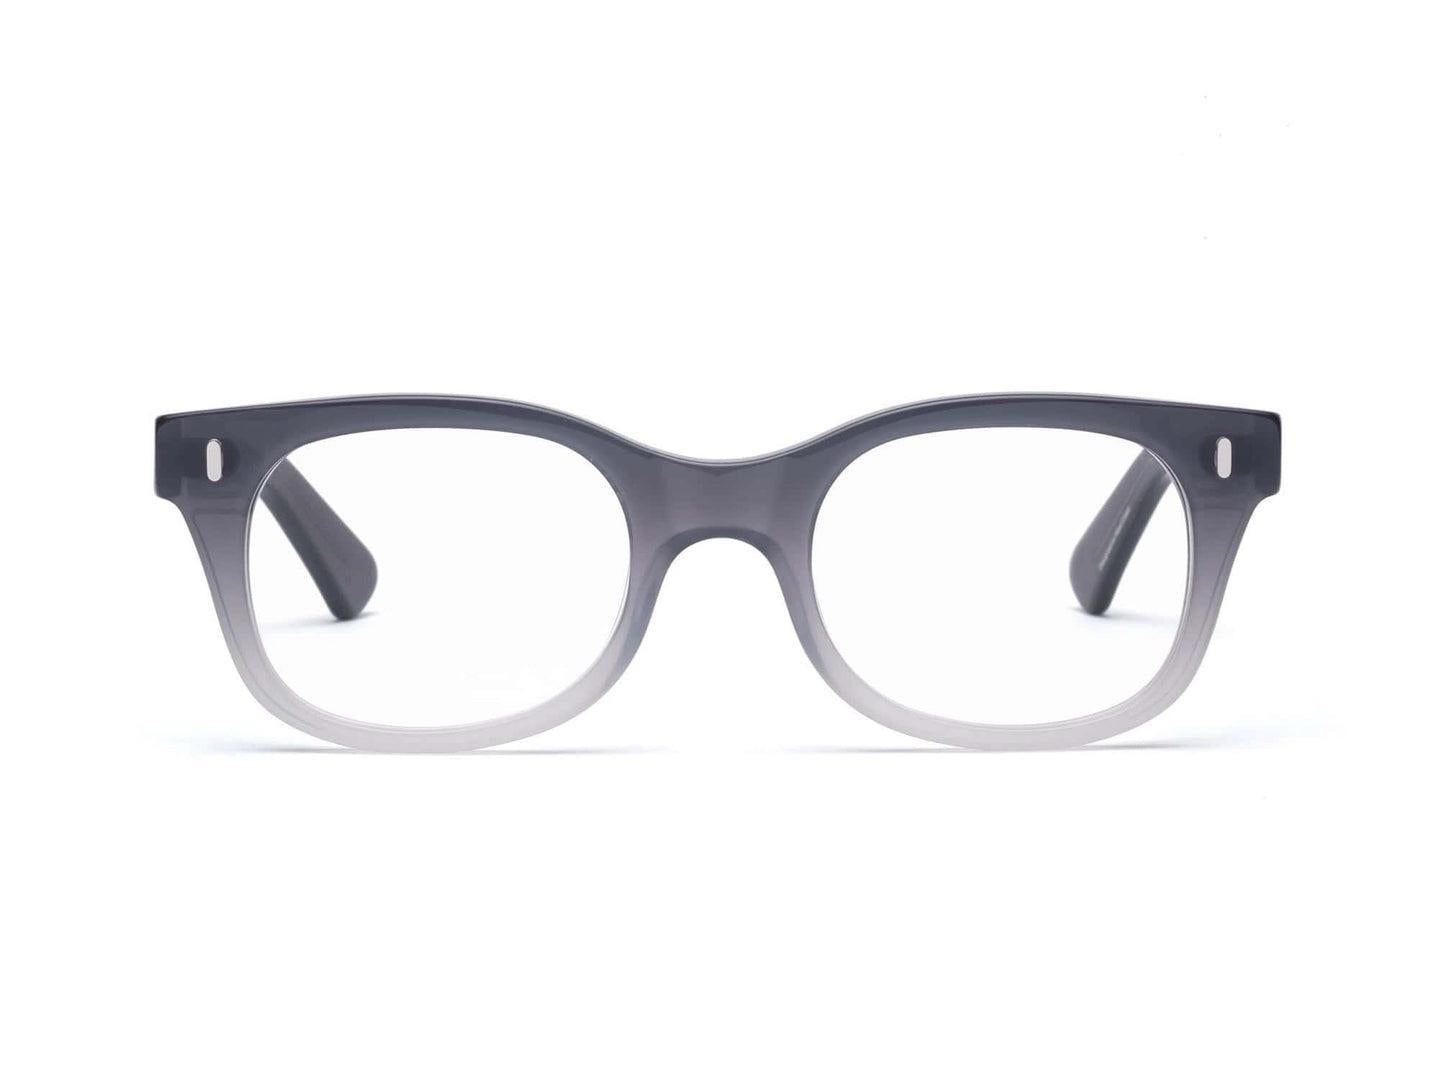 Bixby Progressive Glasses